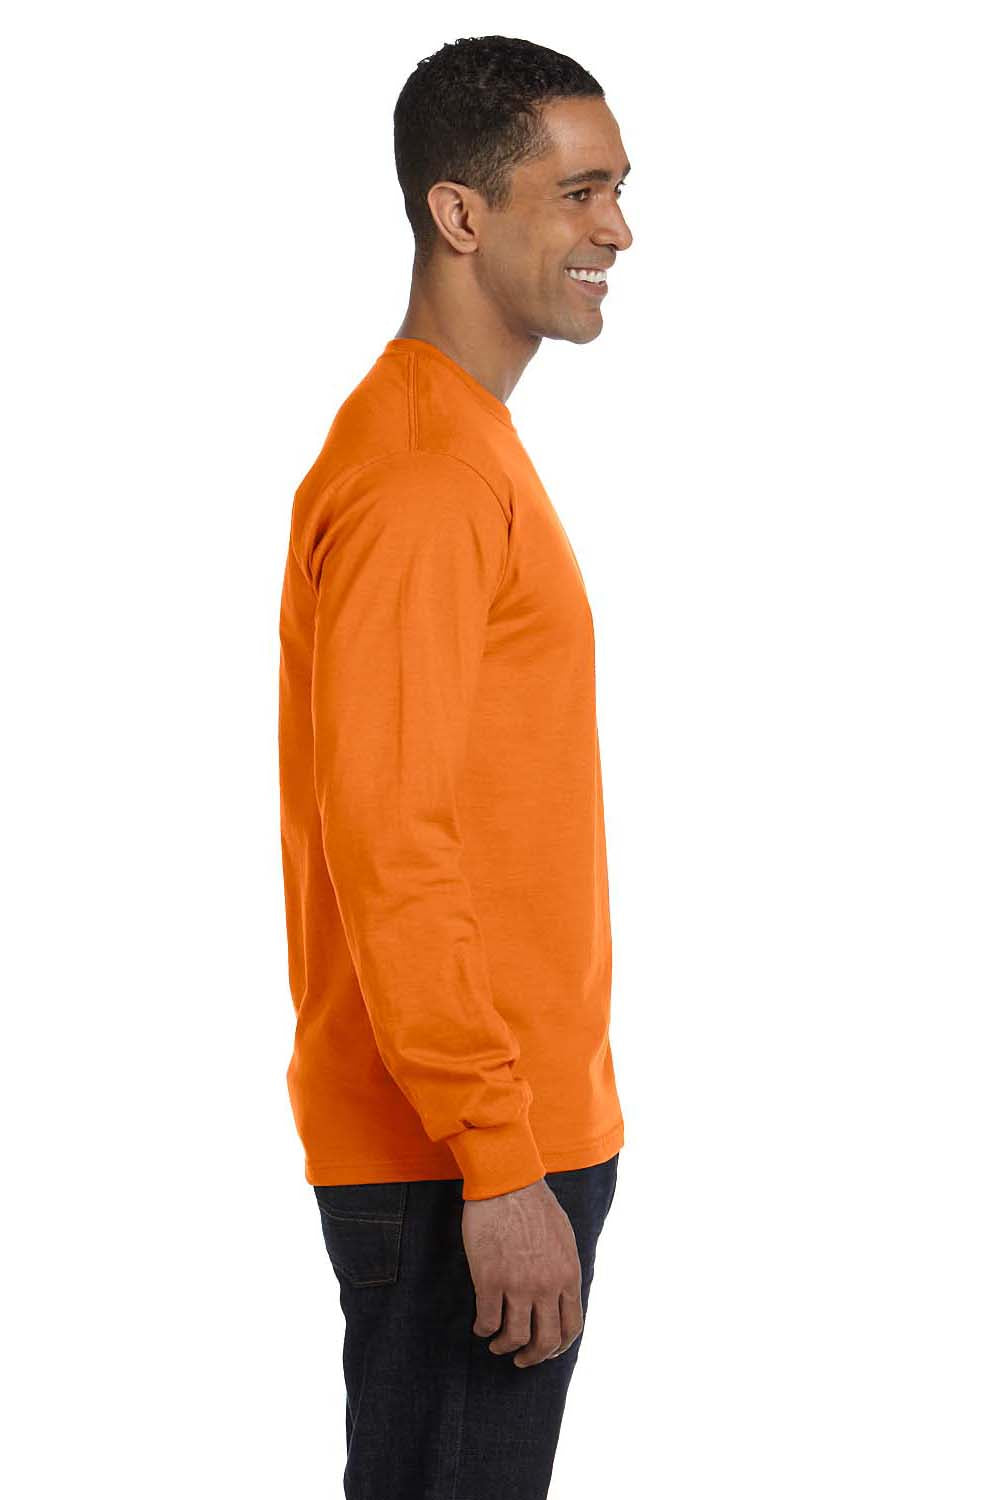 Hanes 5186 Mens Beefy-T Long Sleeve Crewneck T-Shirt Orange Side